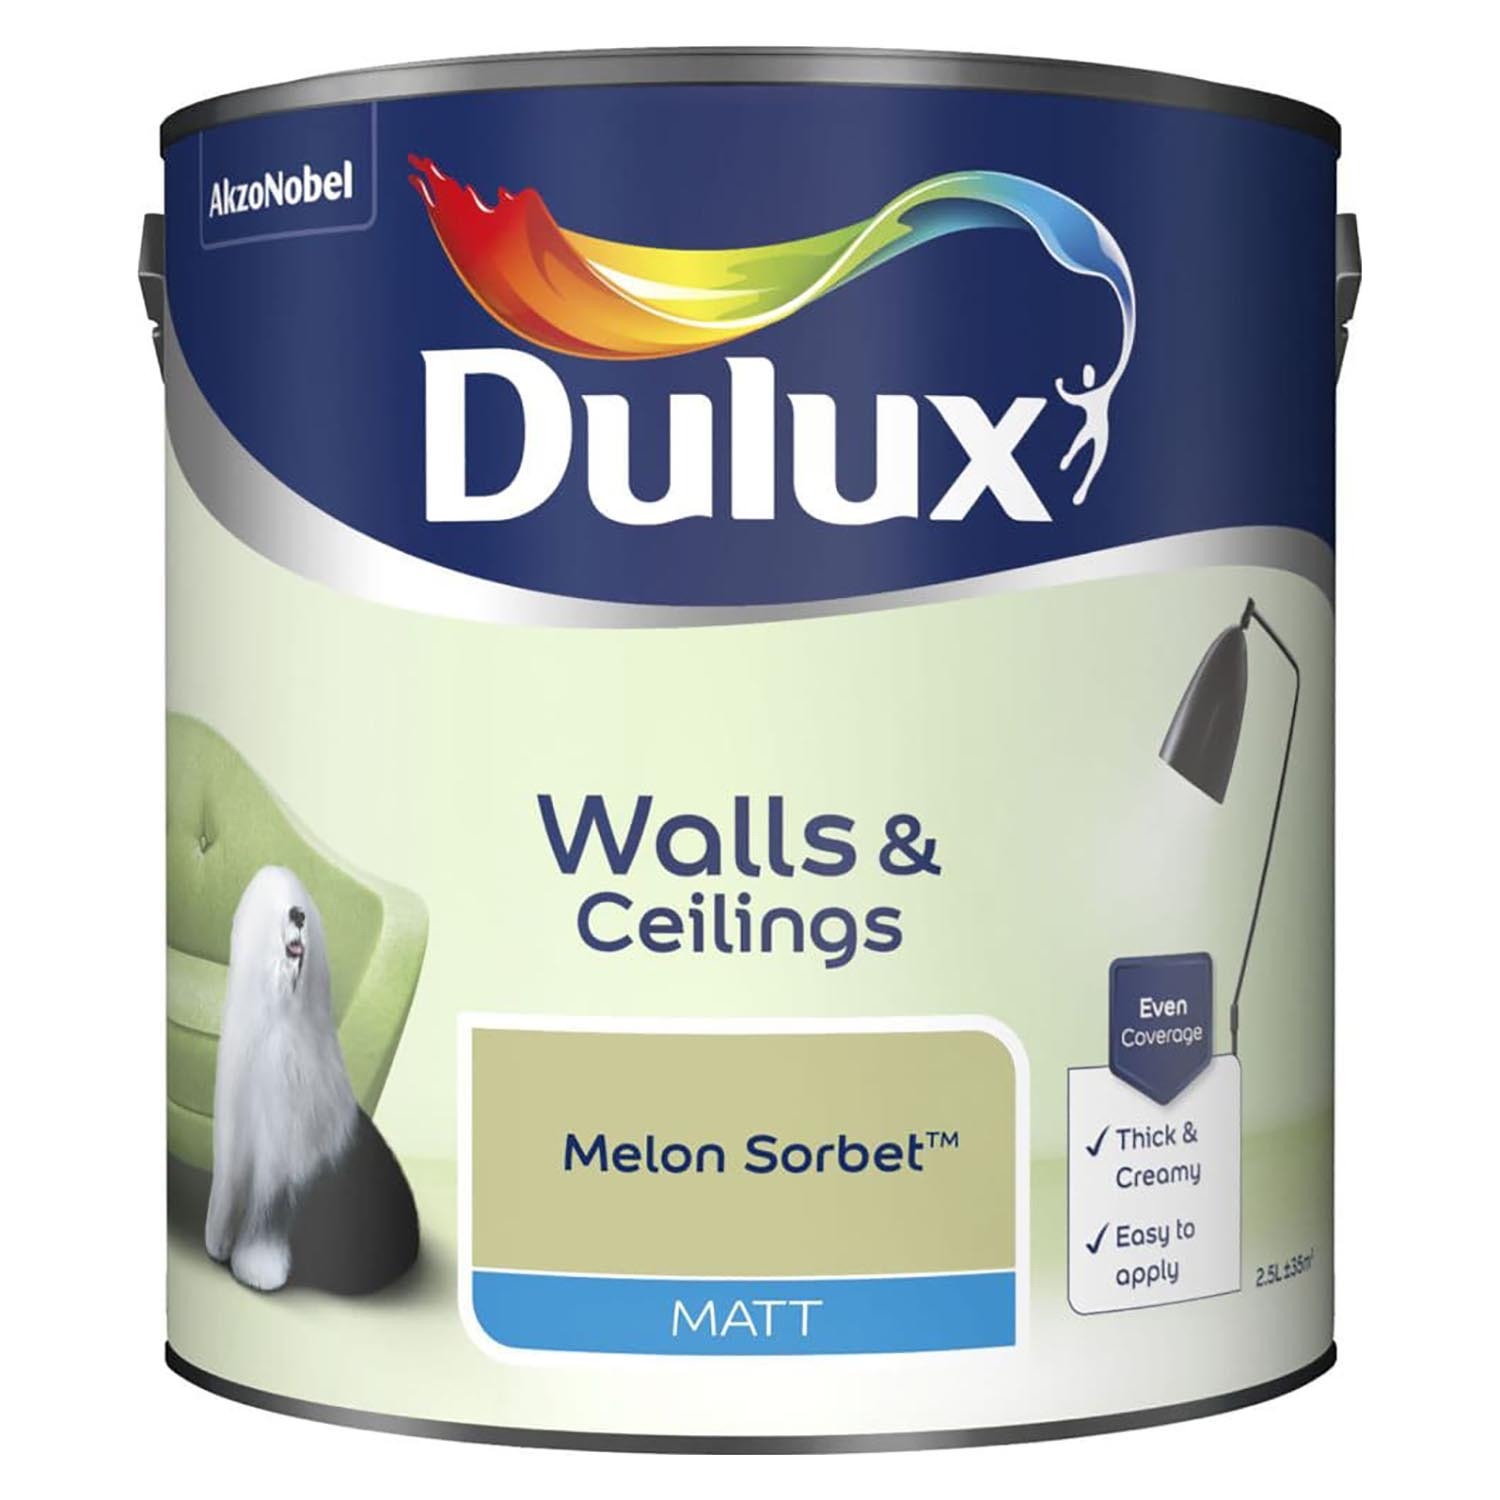 Dulux Walls and Ceilings Matt Paint  - Melon Sorbet Image 3